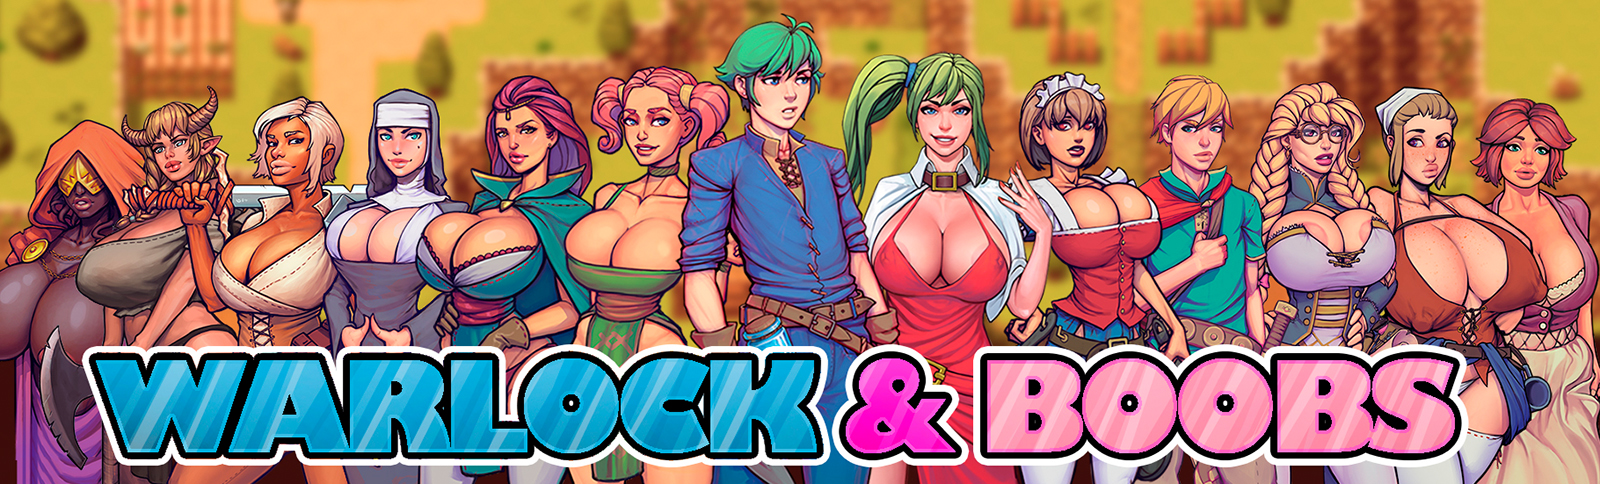 Boobr Download - Warlock and Boobs by boobsgames